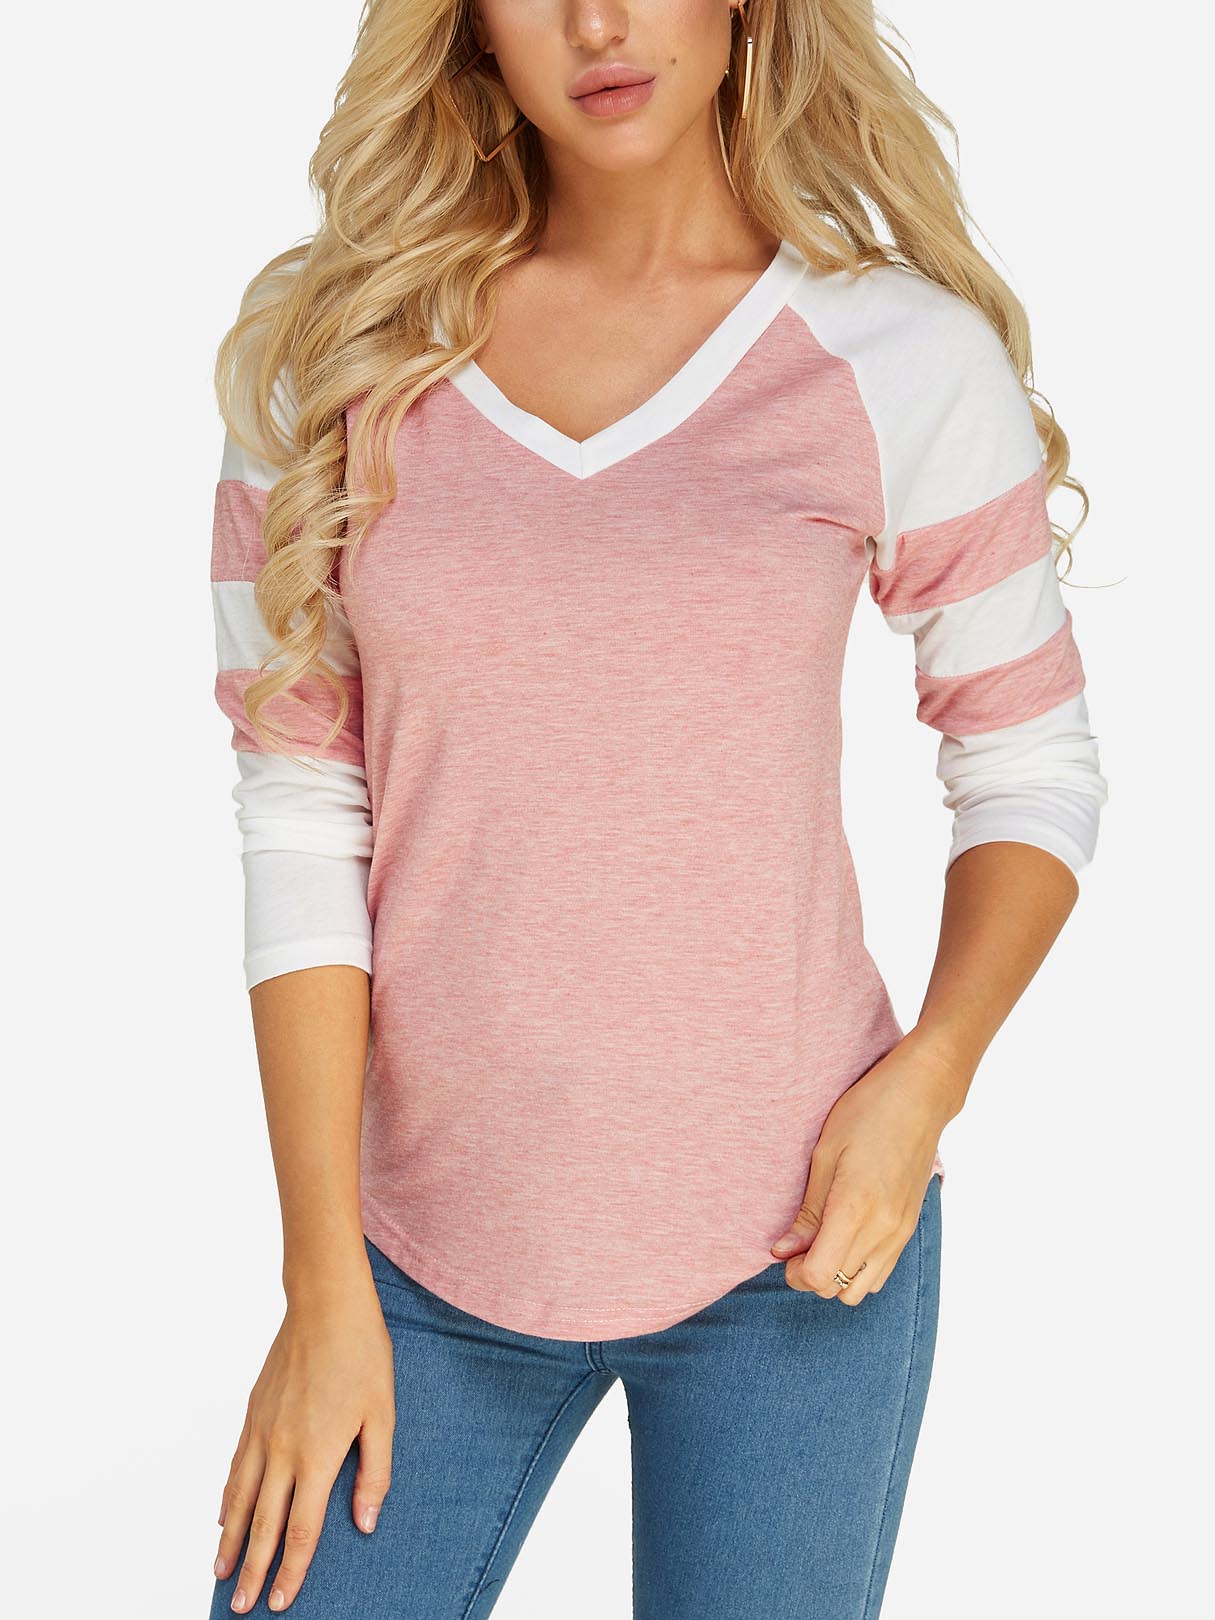 Wholesale V-Neck Plain Long Sleeve Pink T-Shirts